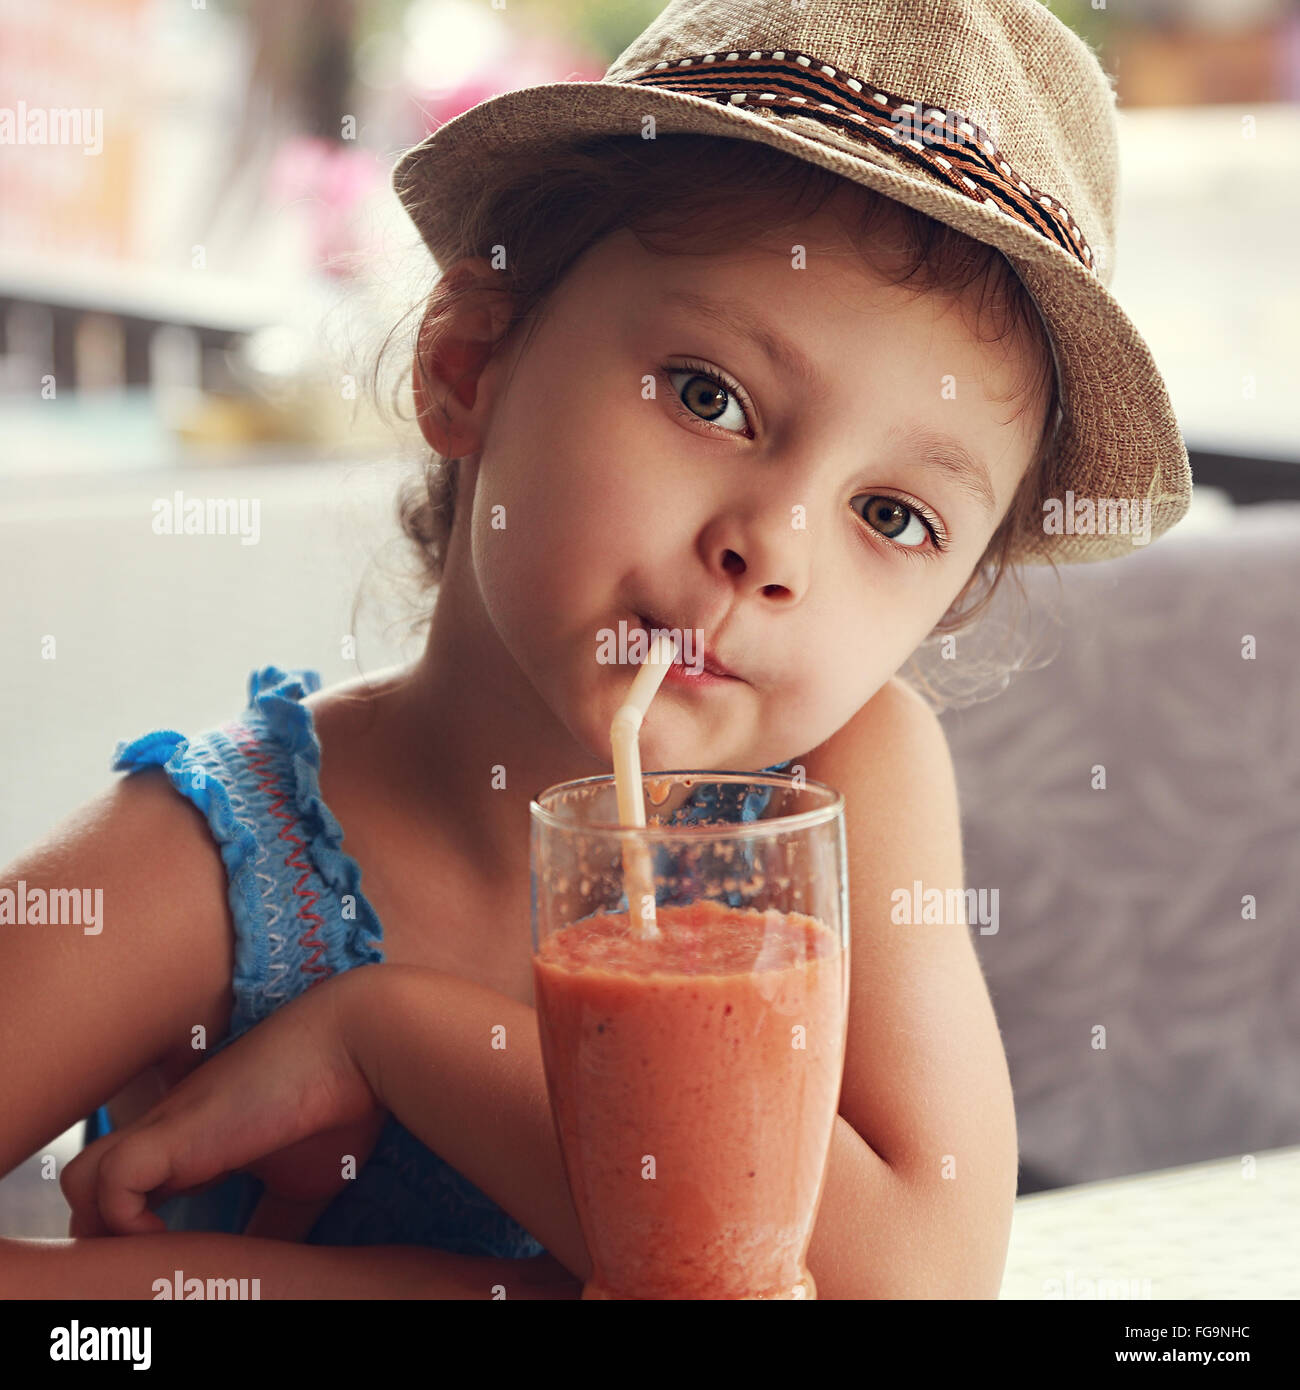 Fun cute kid girl drinking healthy smoothie juice in street restaurant. Closeup toned portrait Stock Photo